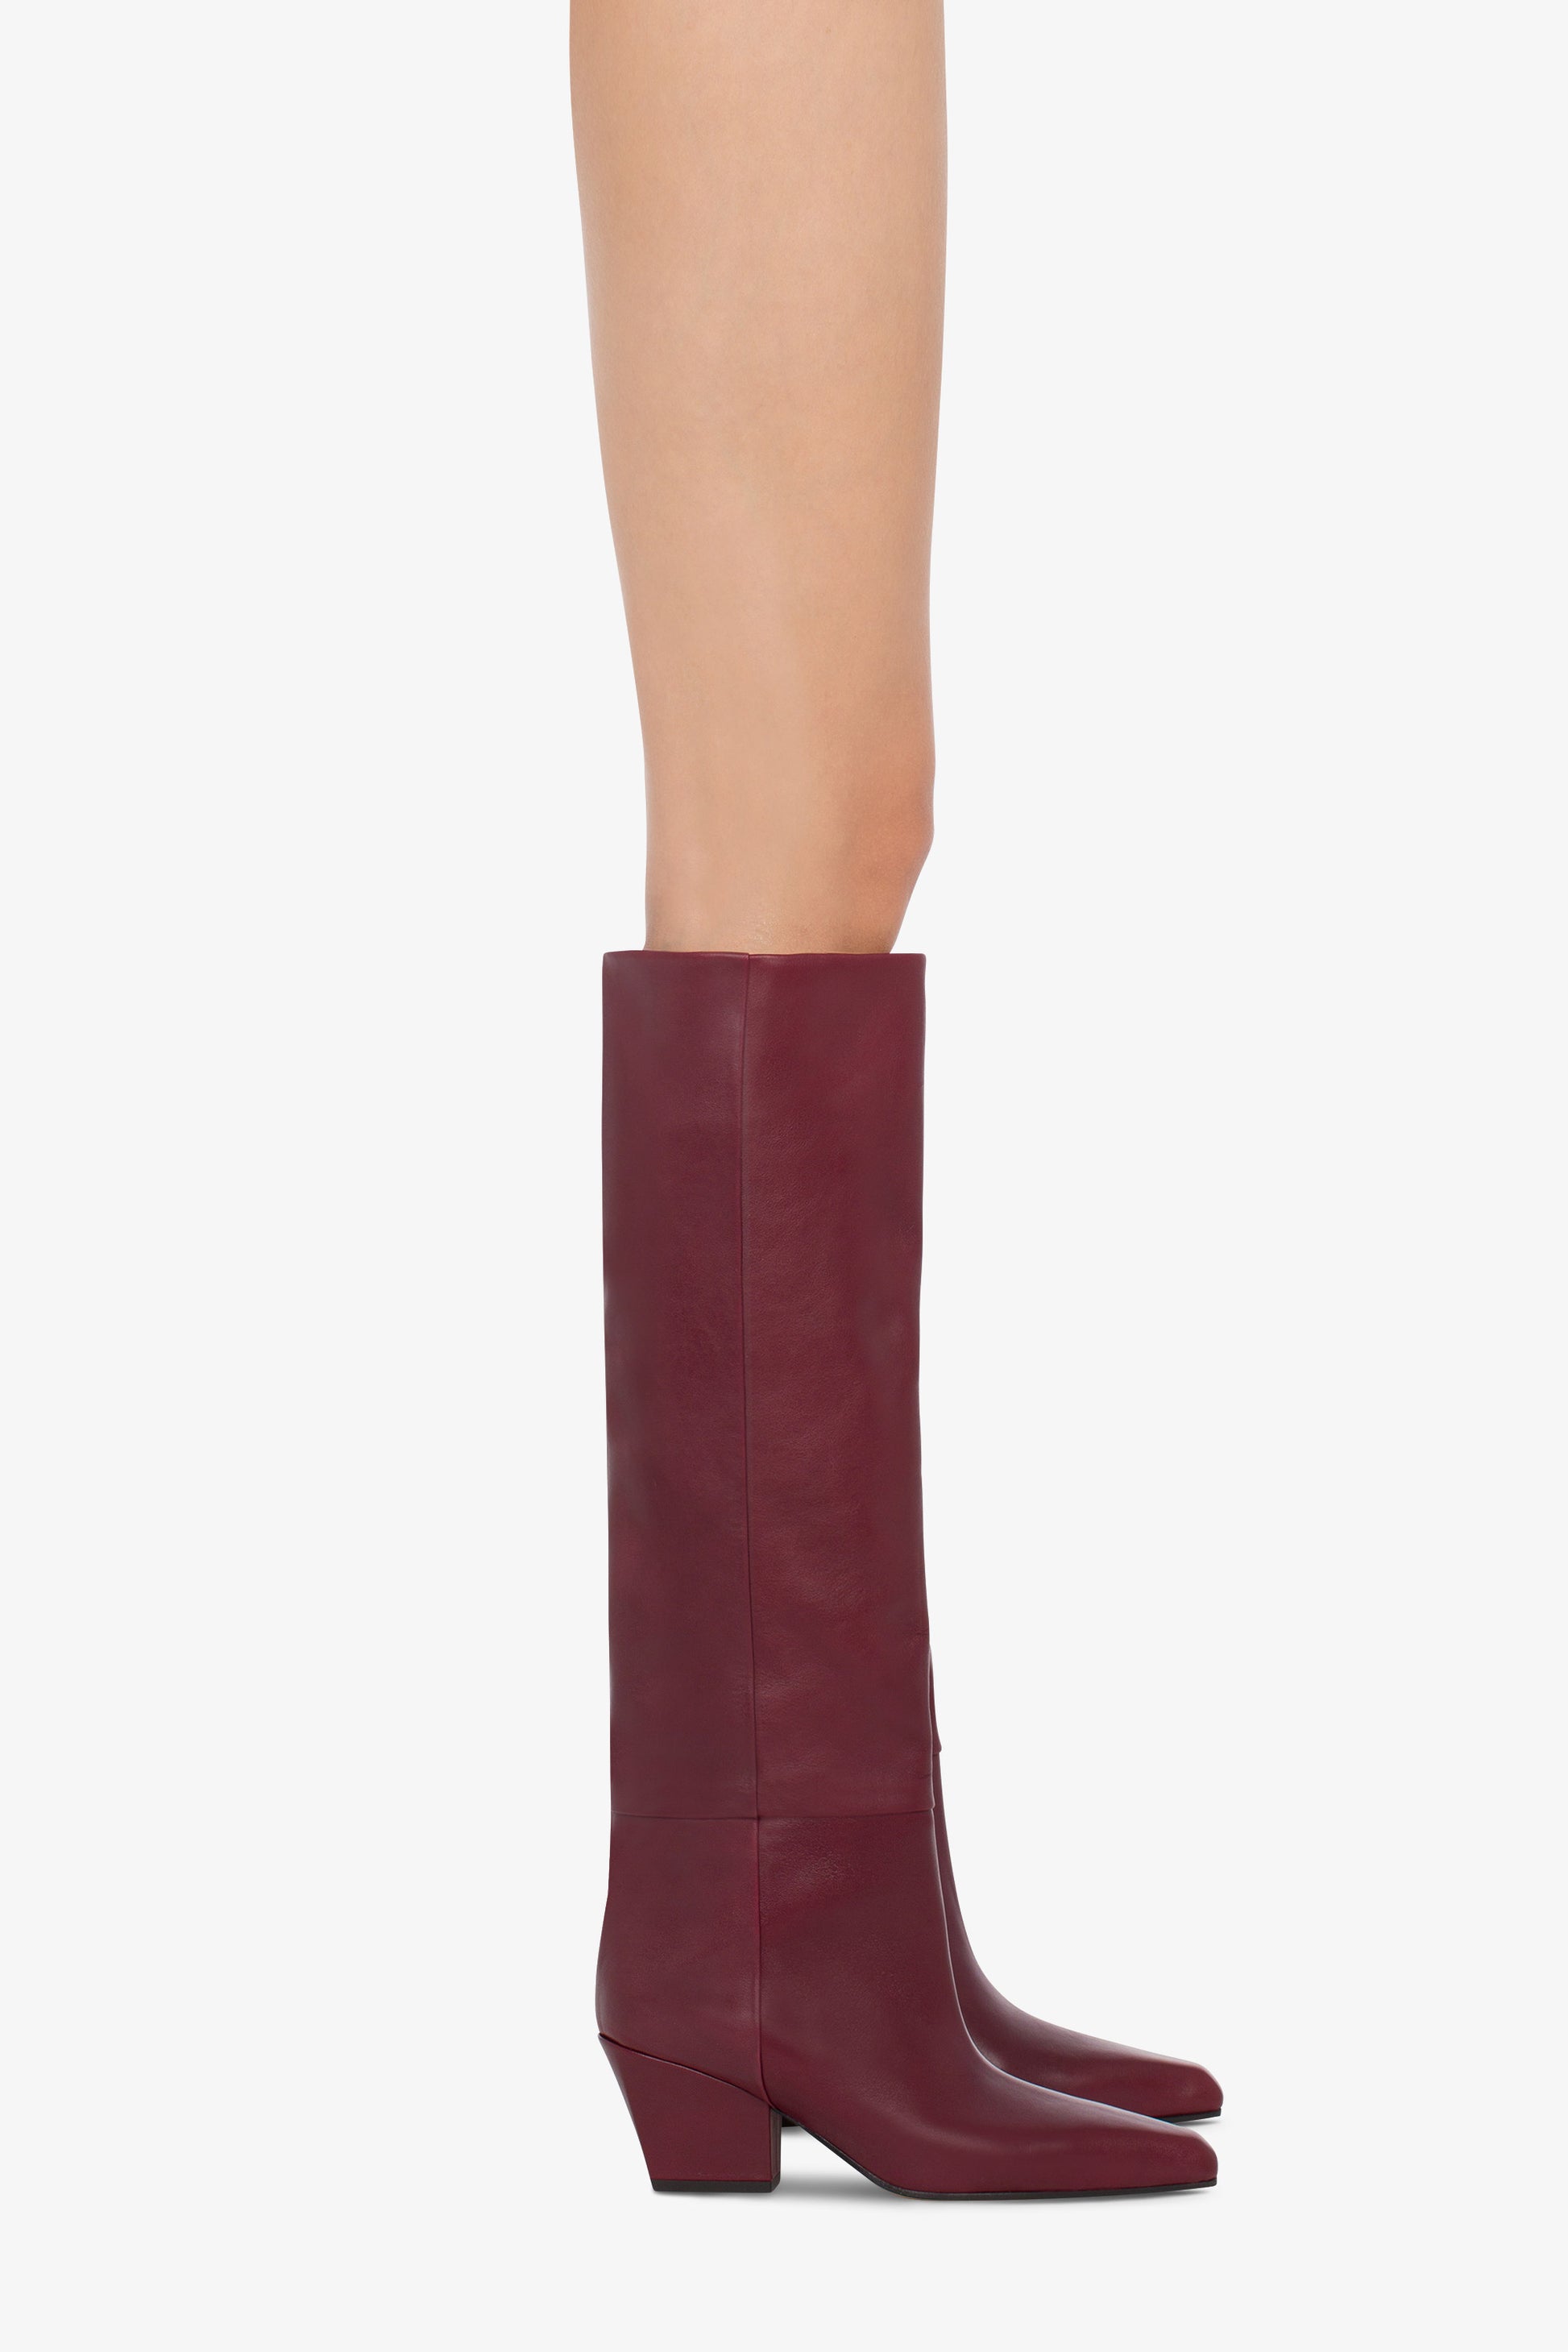 Knee-high, long pointed boot in supple rouge noir leather - Produkt getragen